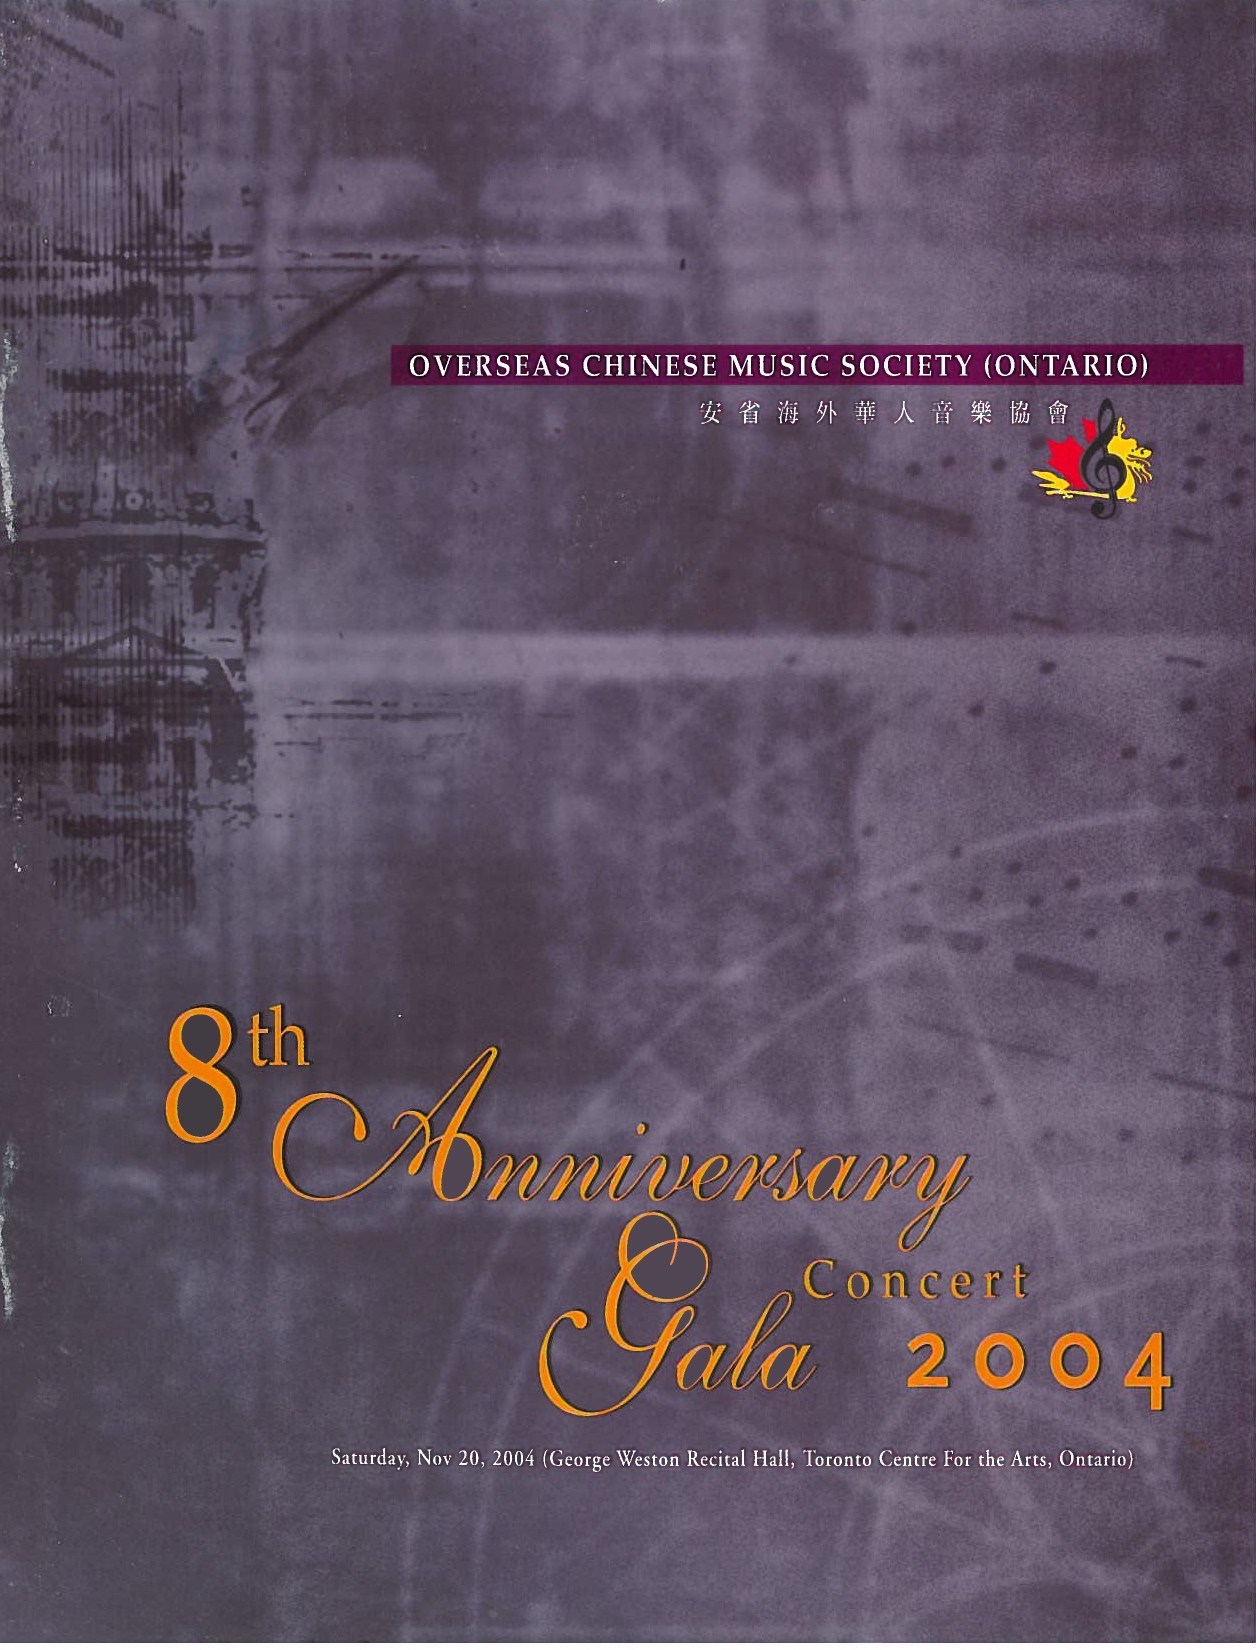 OCMS 8th Anniversary Gala Concert 2004